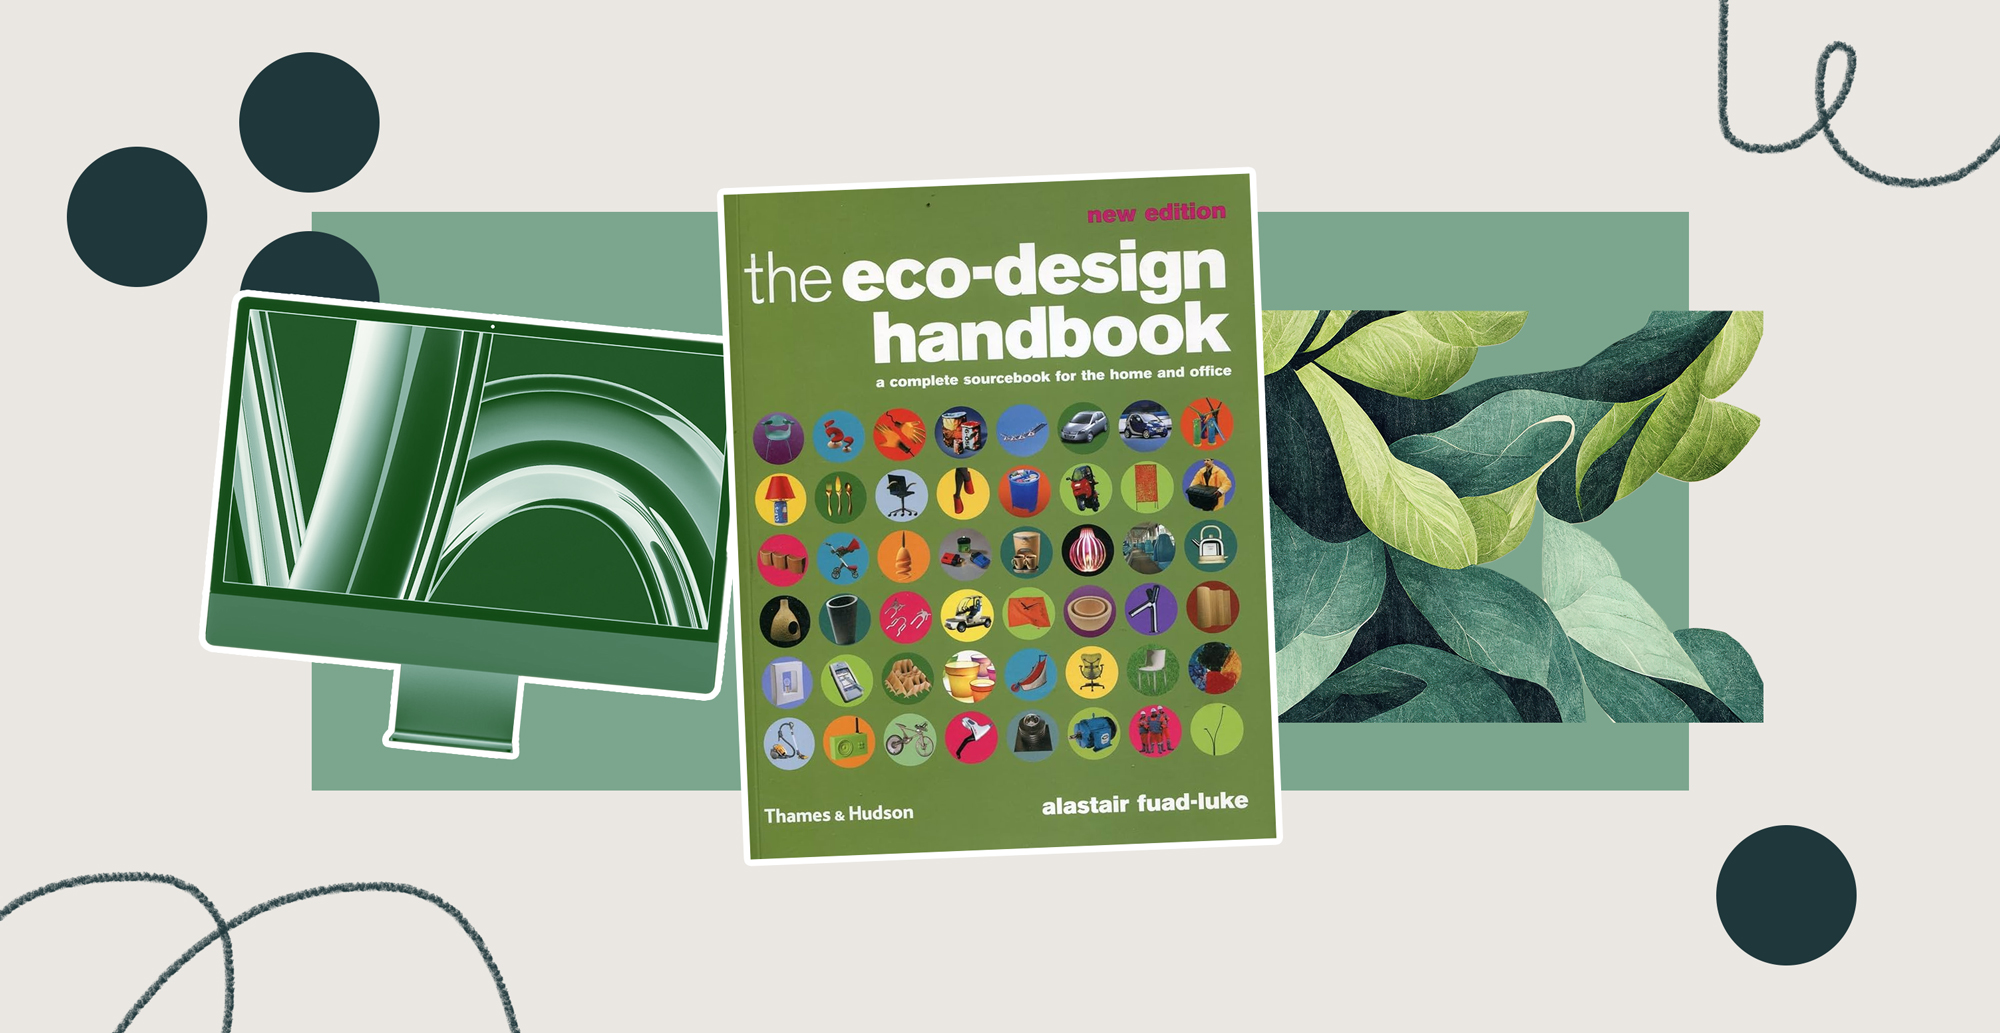 Alastair Fuad-Luke's “The Eco-Design Handbook” is essential reading for aspiring environmental designers focused on sustainability